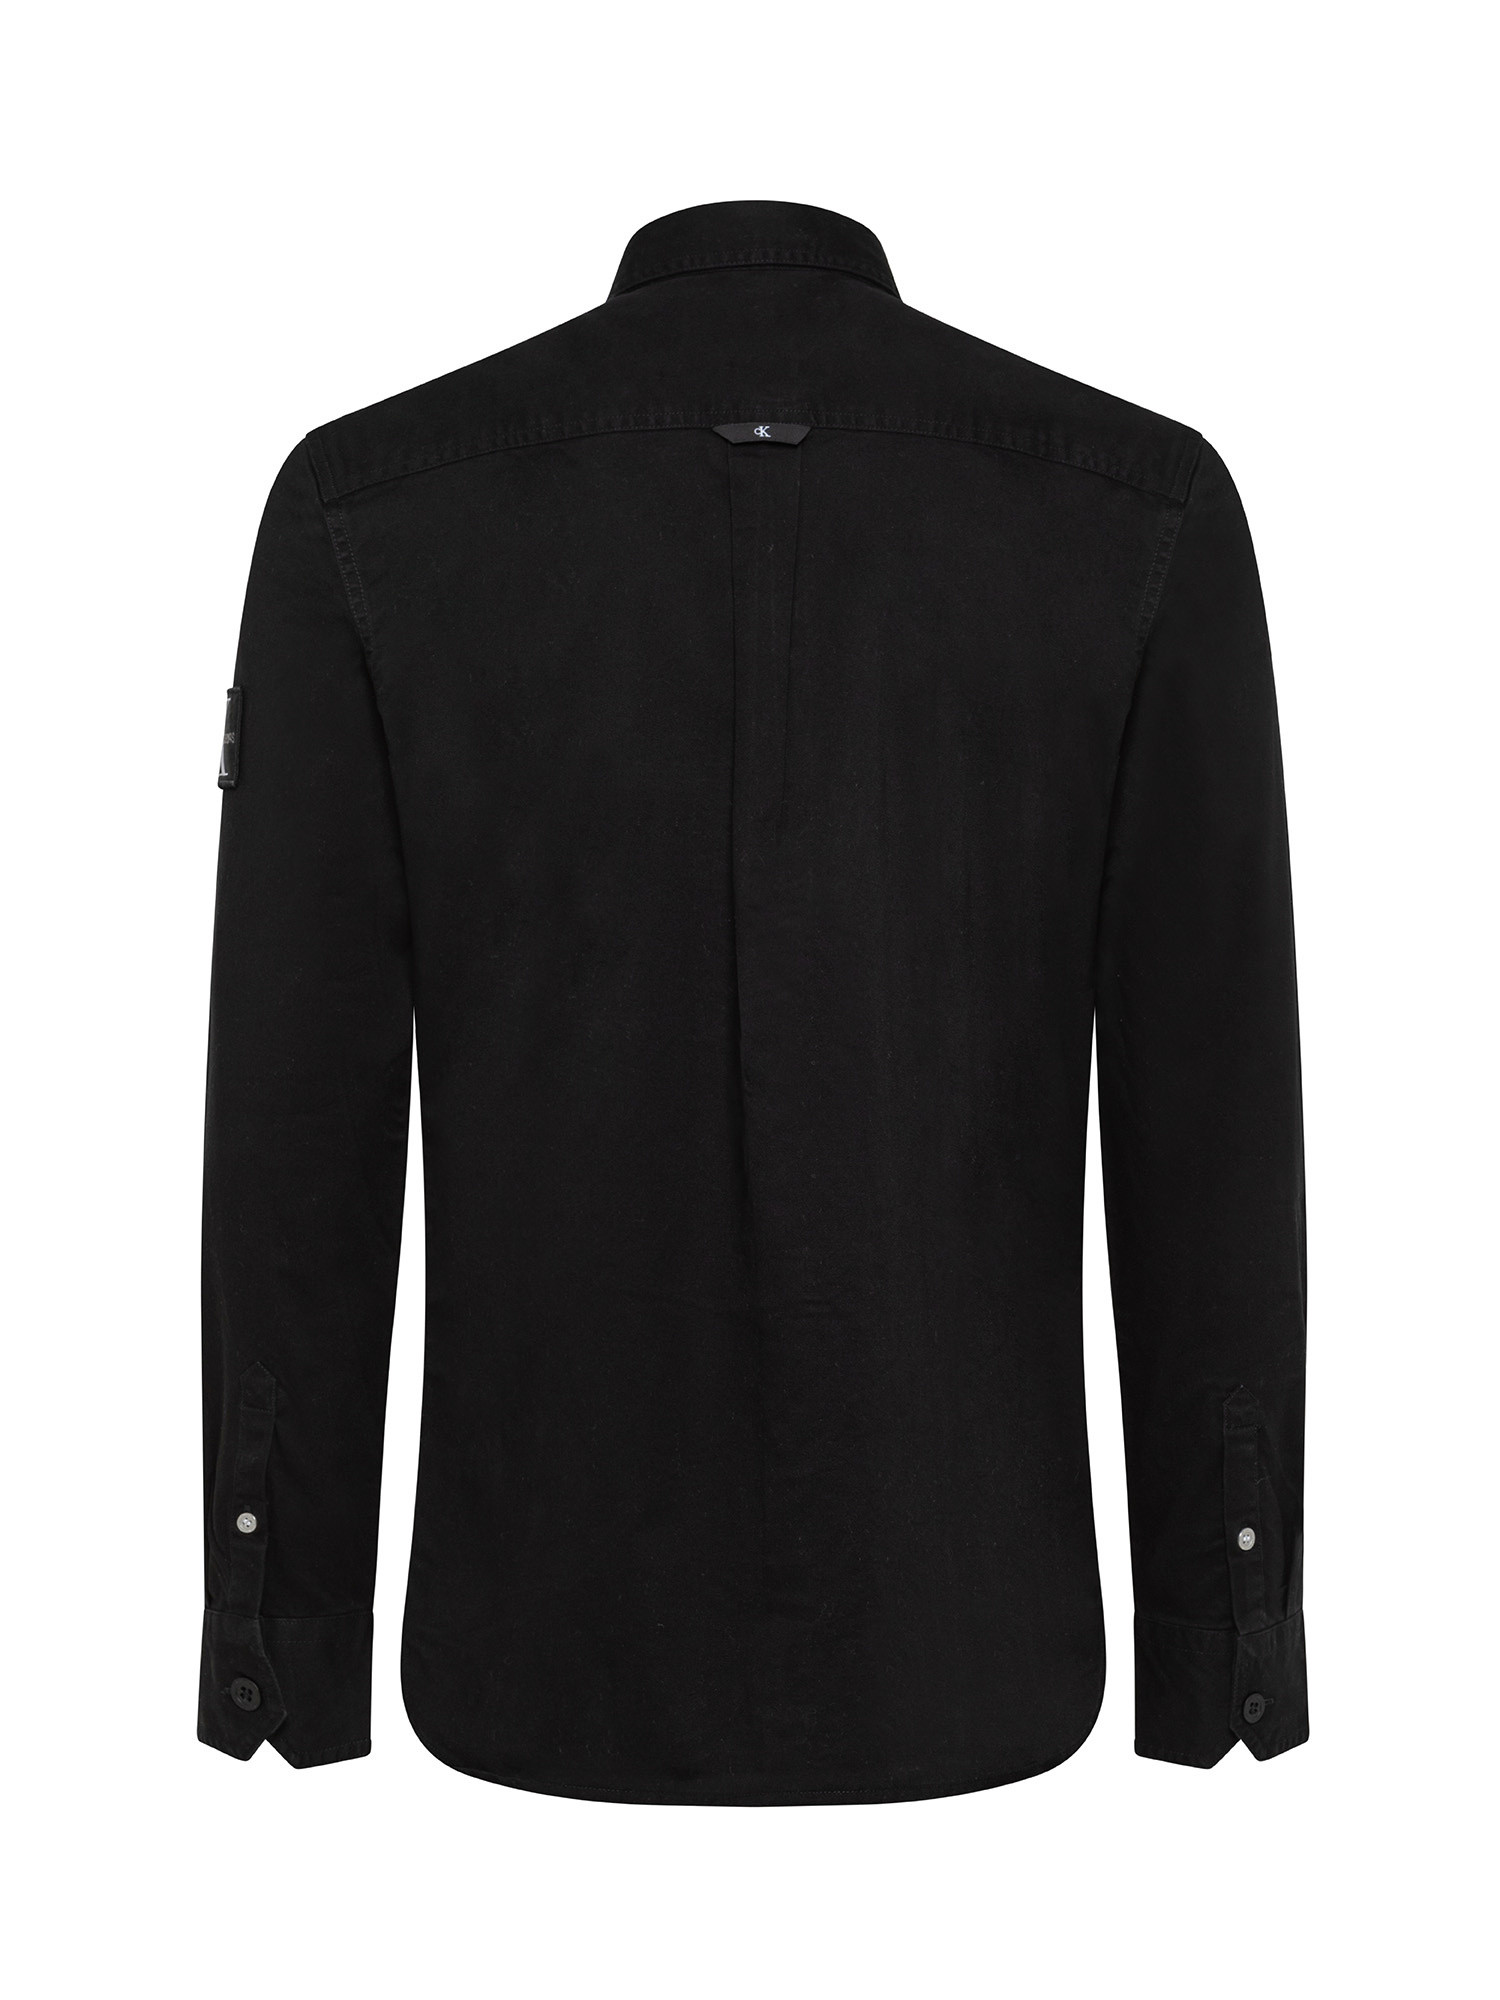 Cotton twill shirt, Black, large image number 1